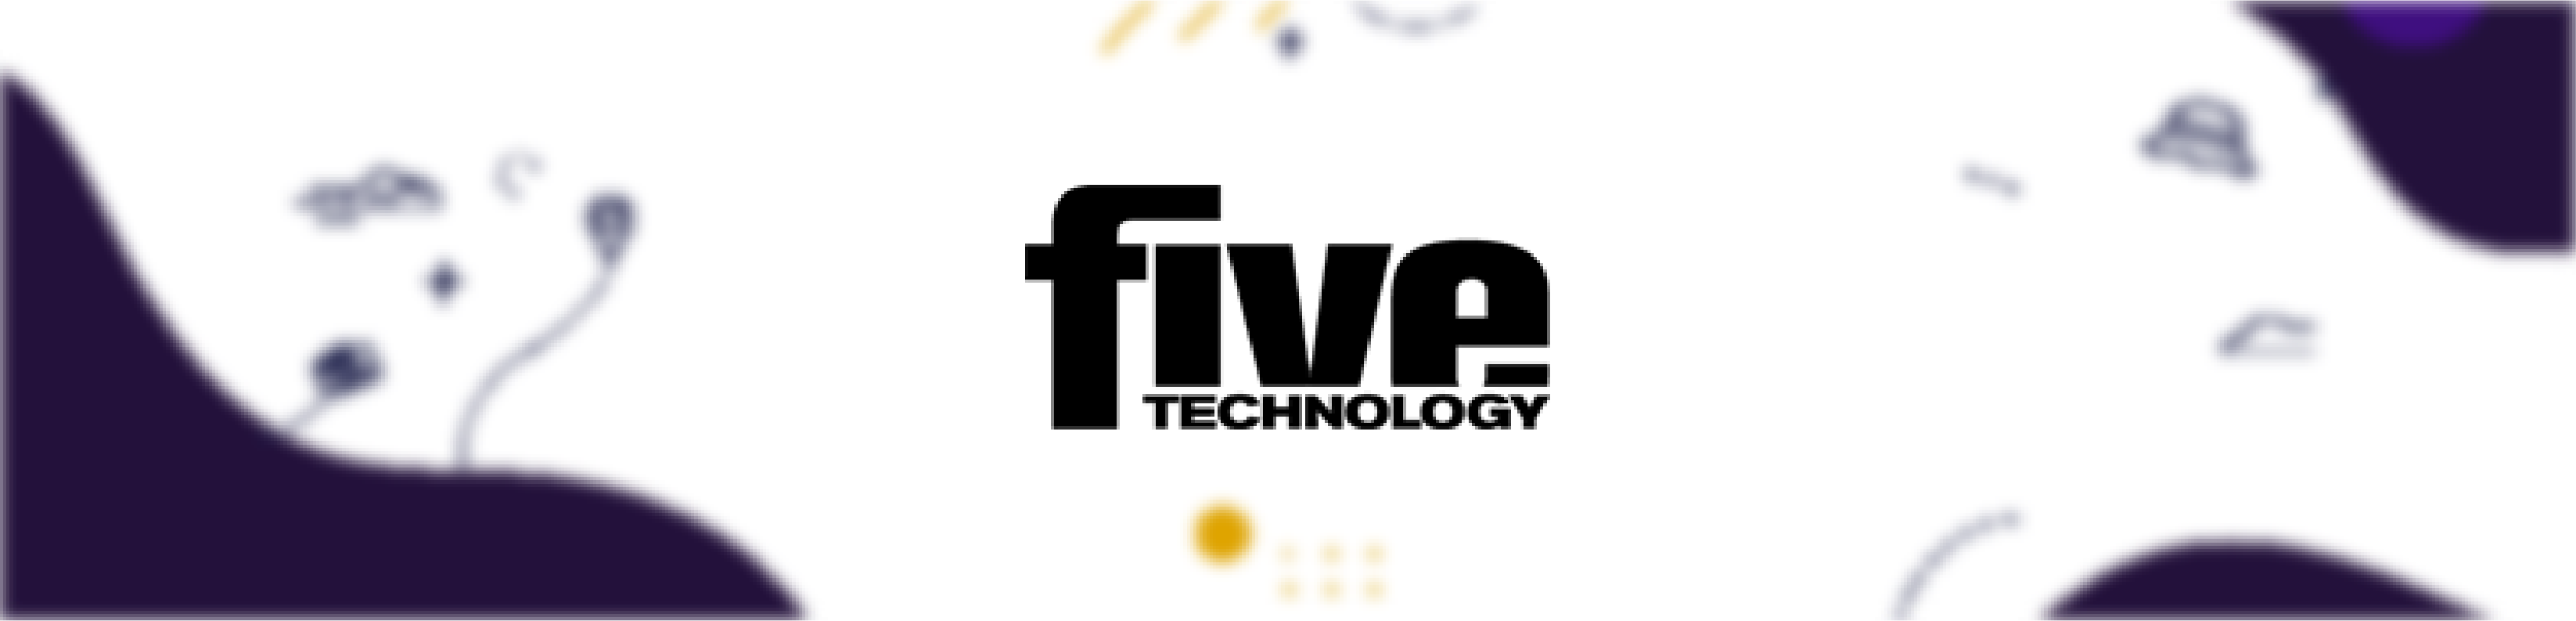 fiveTechnologies